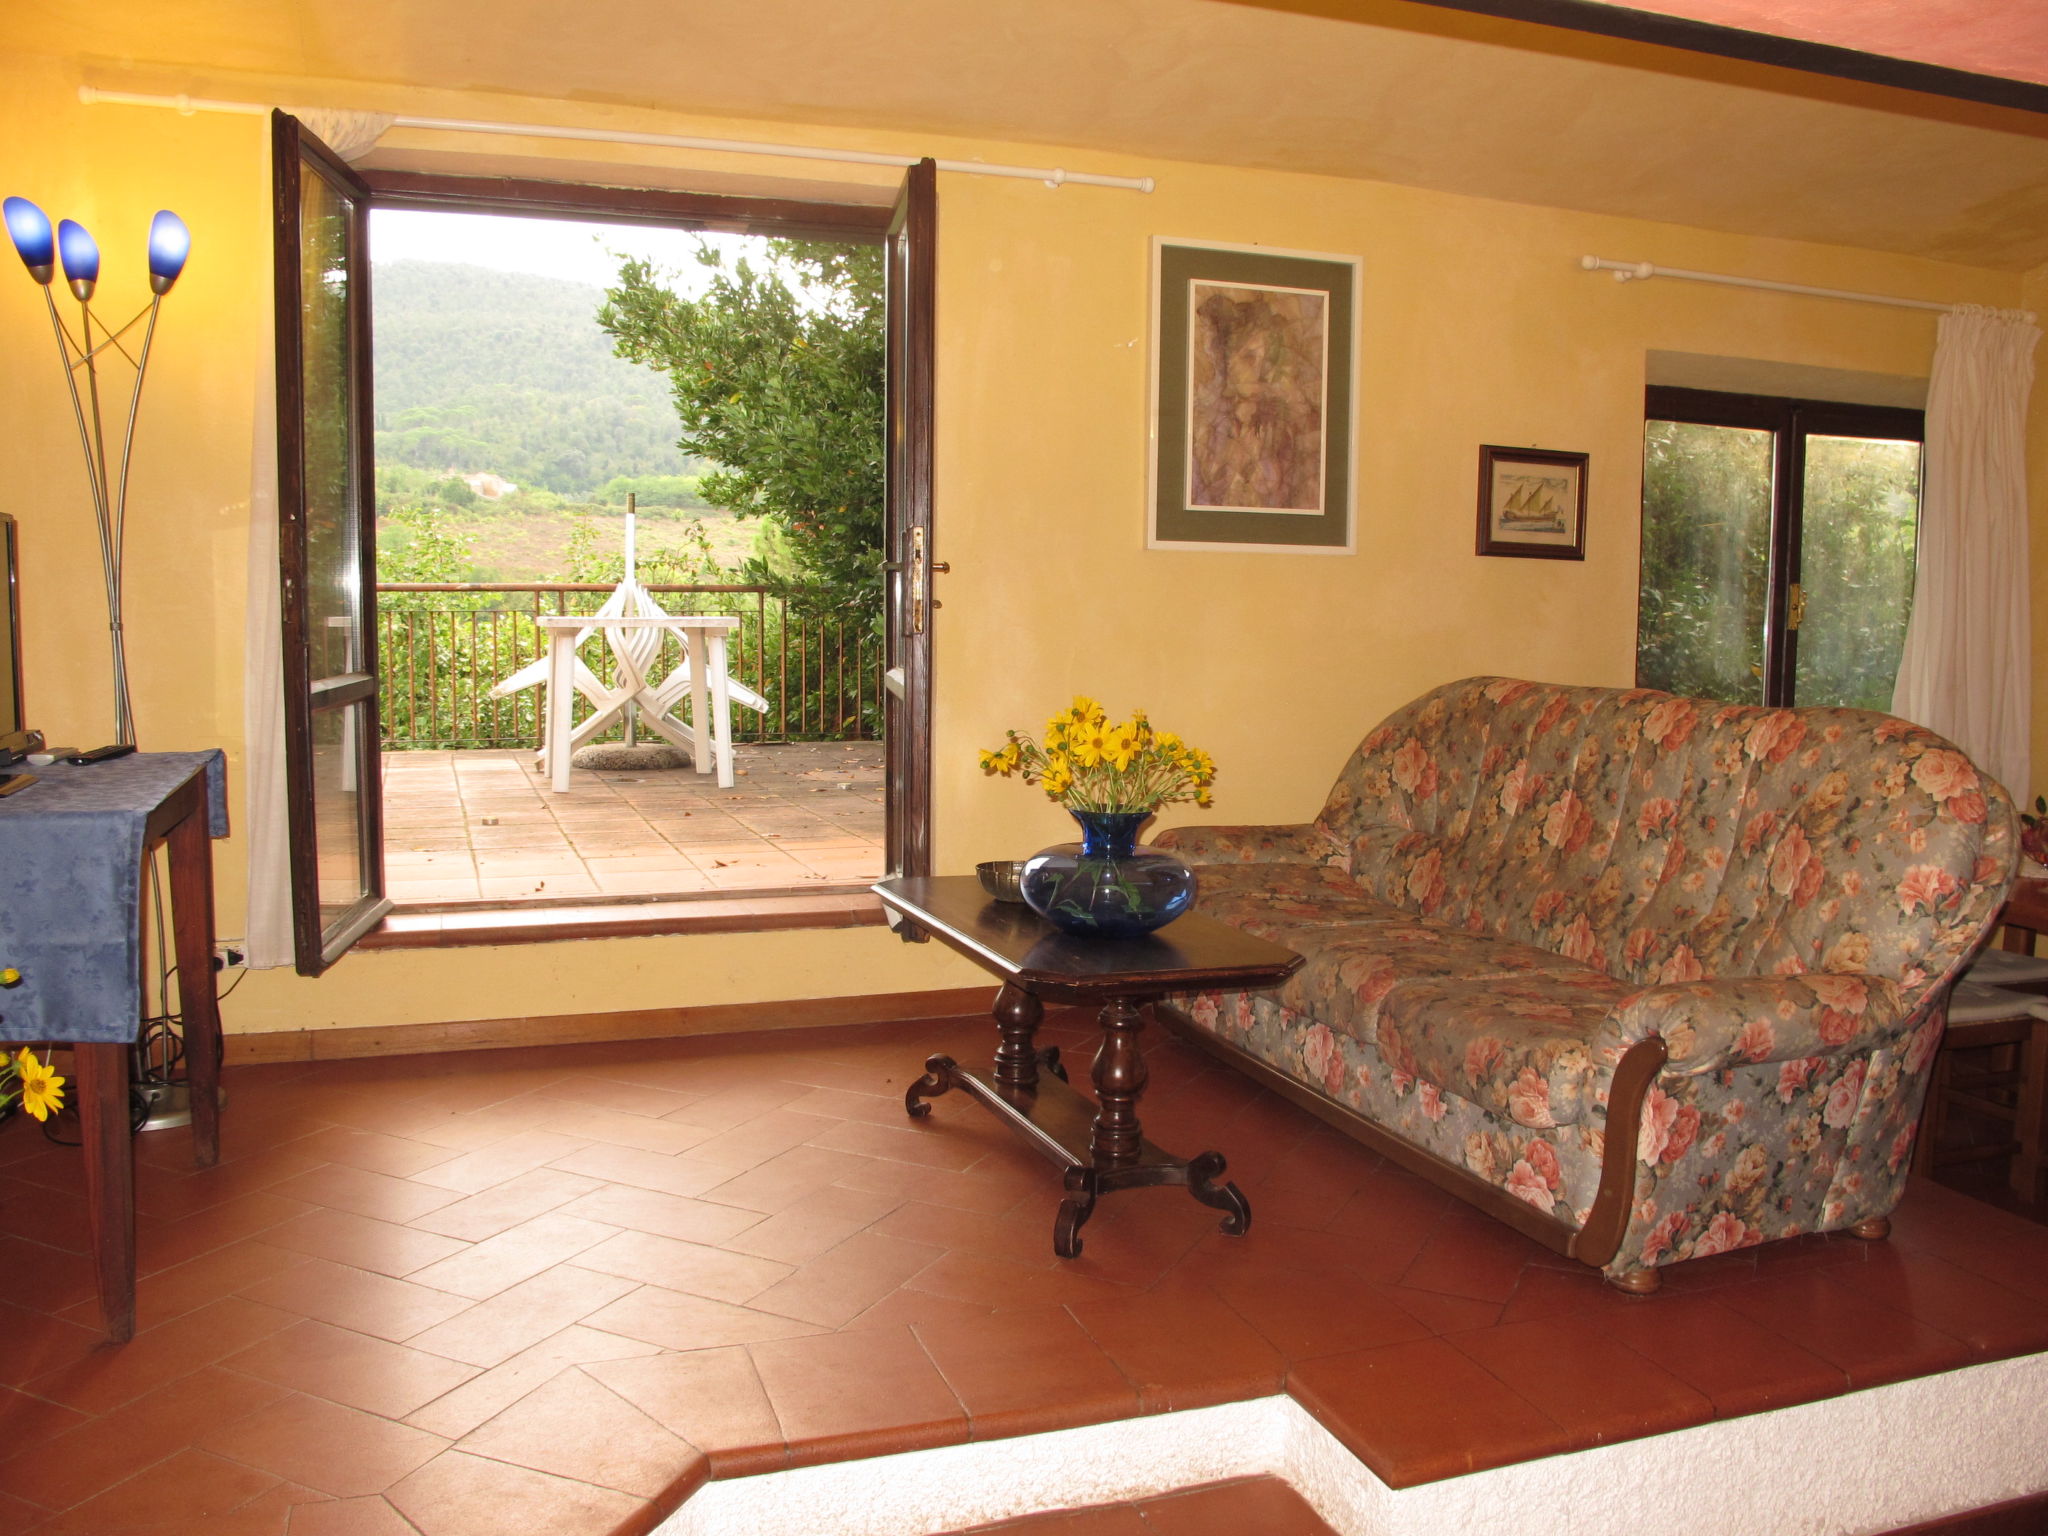 Foto 14 - Casa con 4 camere da letto a San Gimignano con piscina e giardino